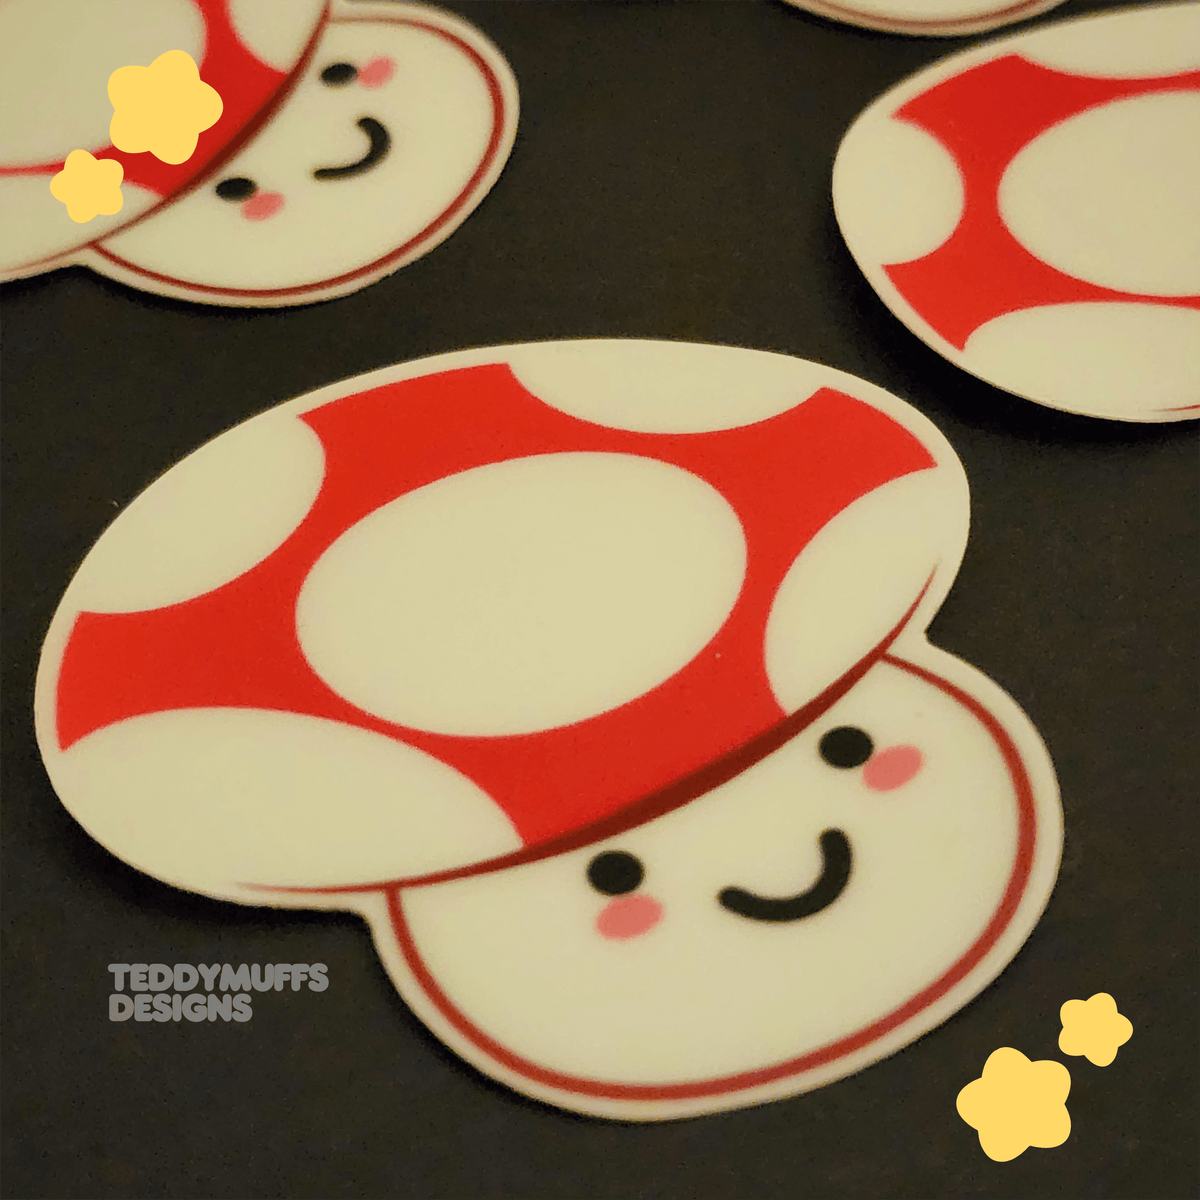 Glow in the Dark Mushroom Sticker - Teddymuffs Designs